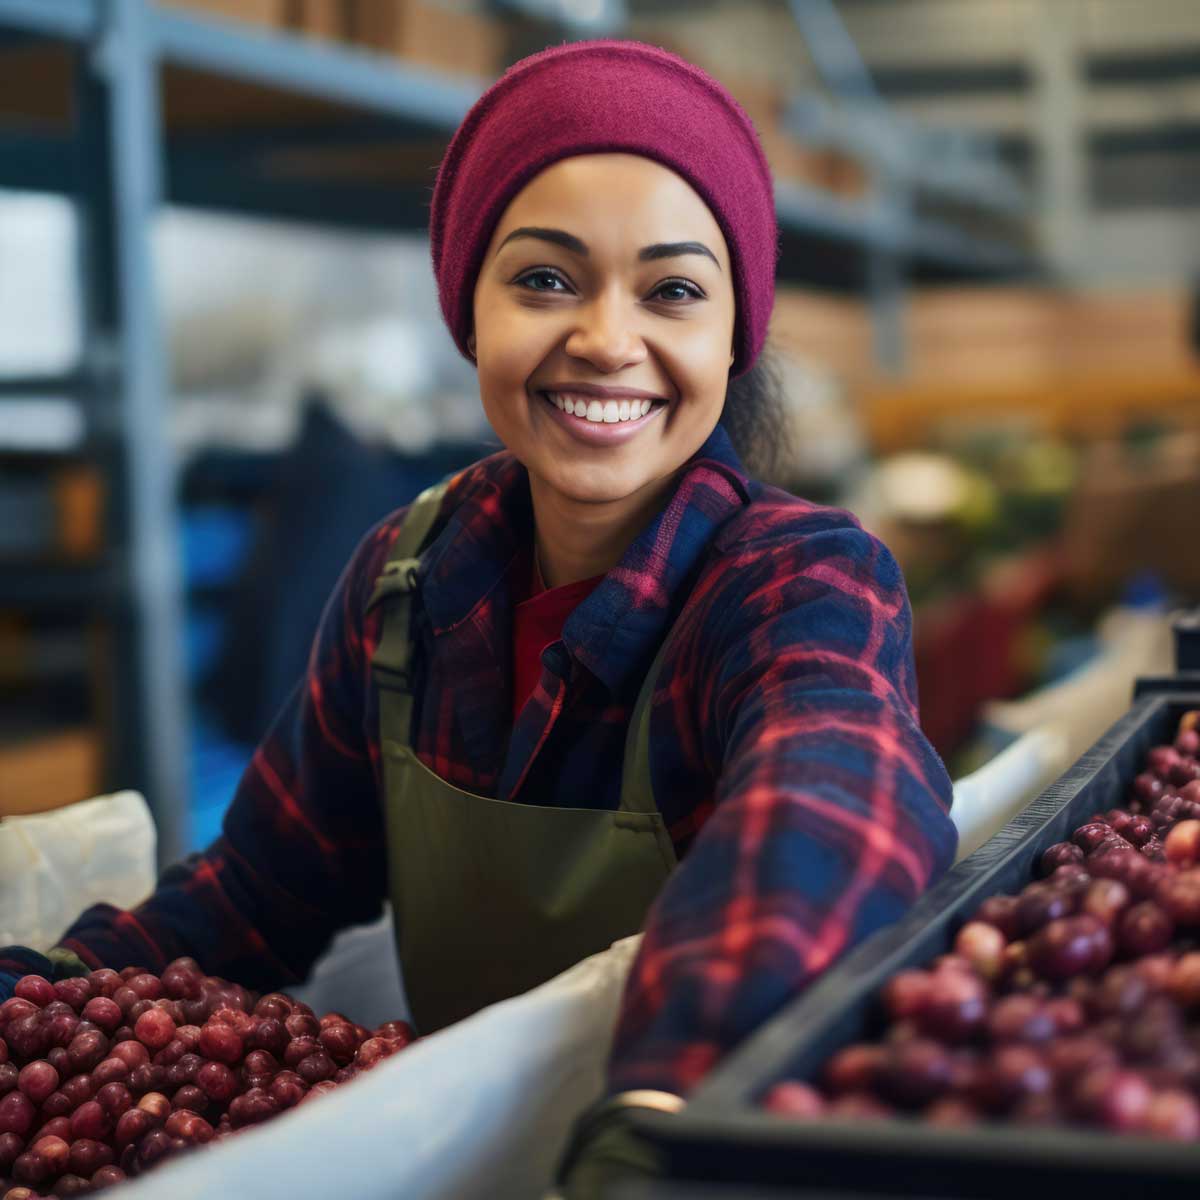 Smiling woman worker sorting fruit in factory